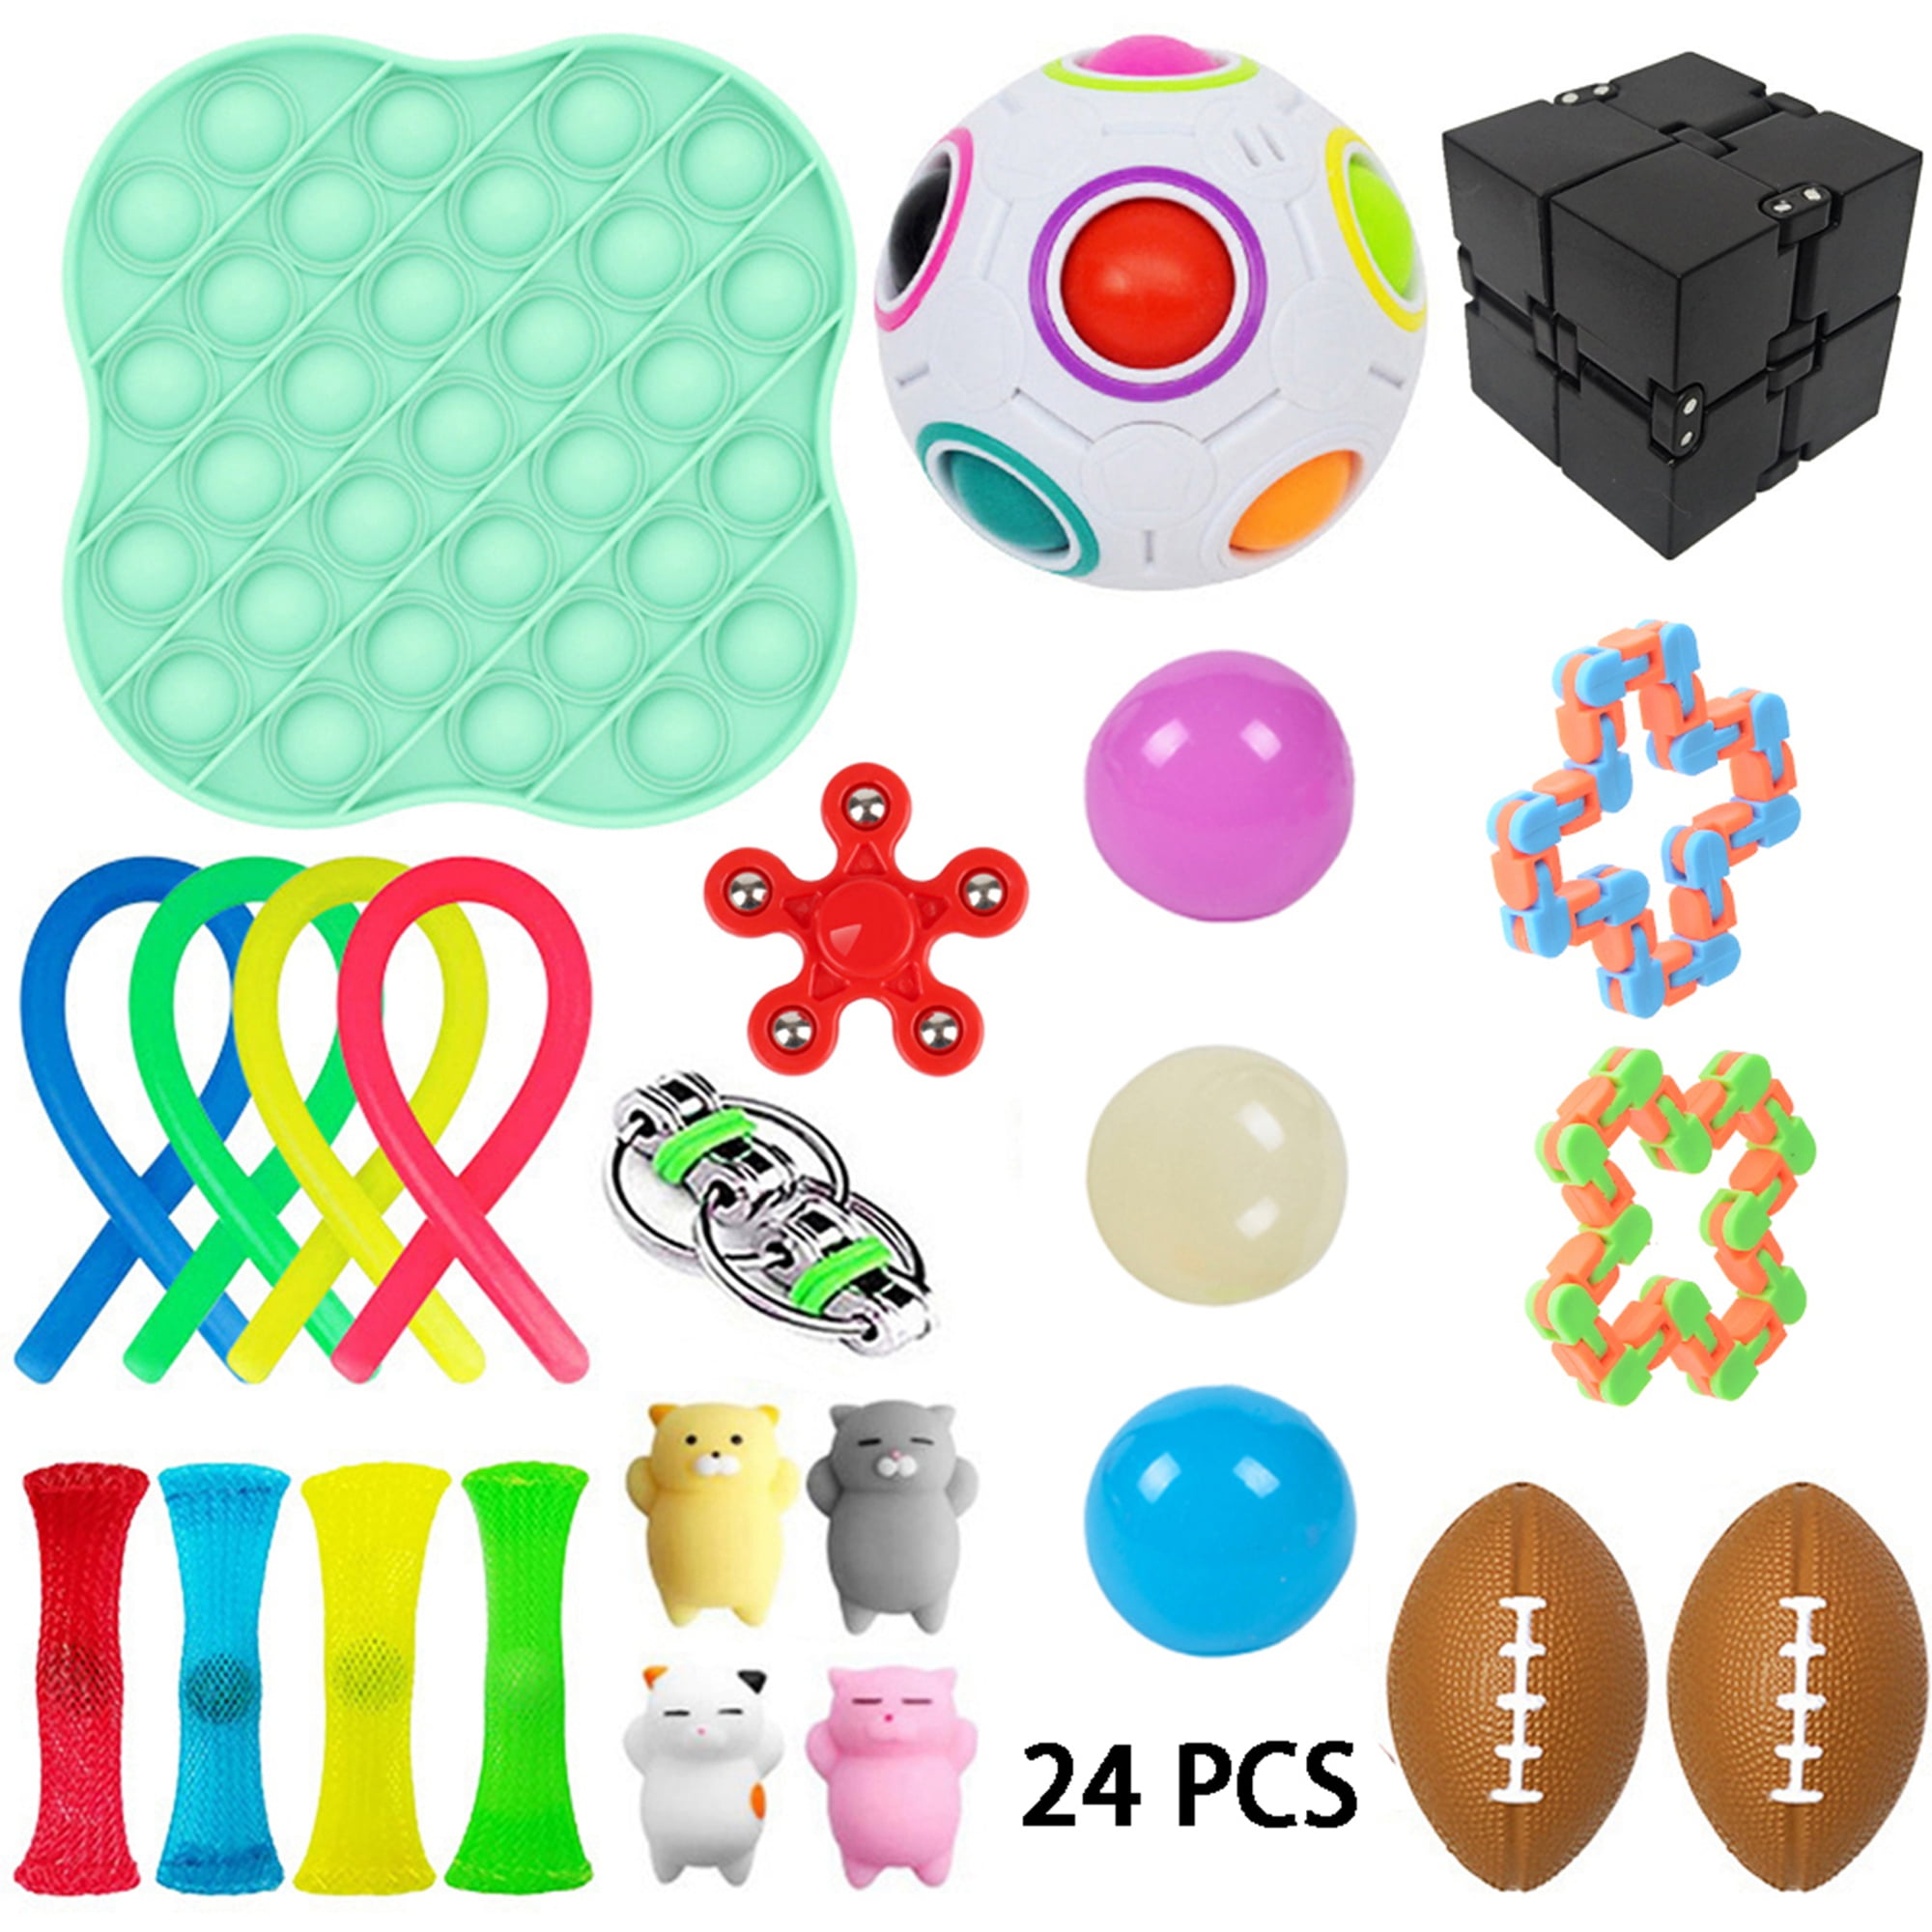 Details about   24 PCS Fidget Sensory Toys Set Autism ADHD Stress Relief Special Need Education 